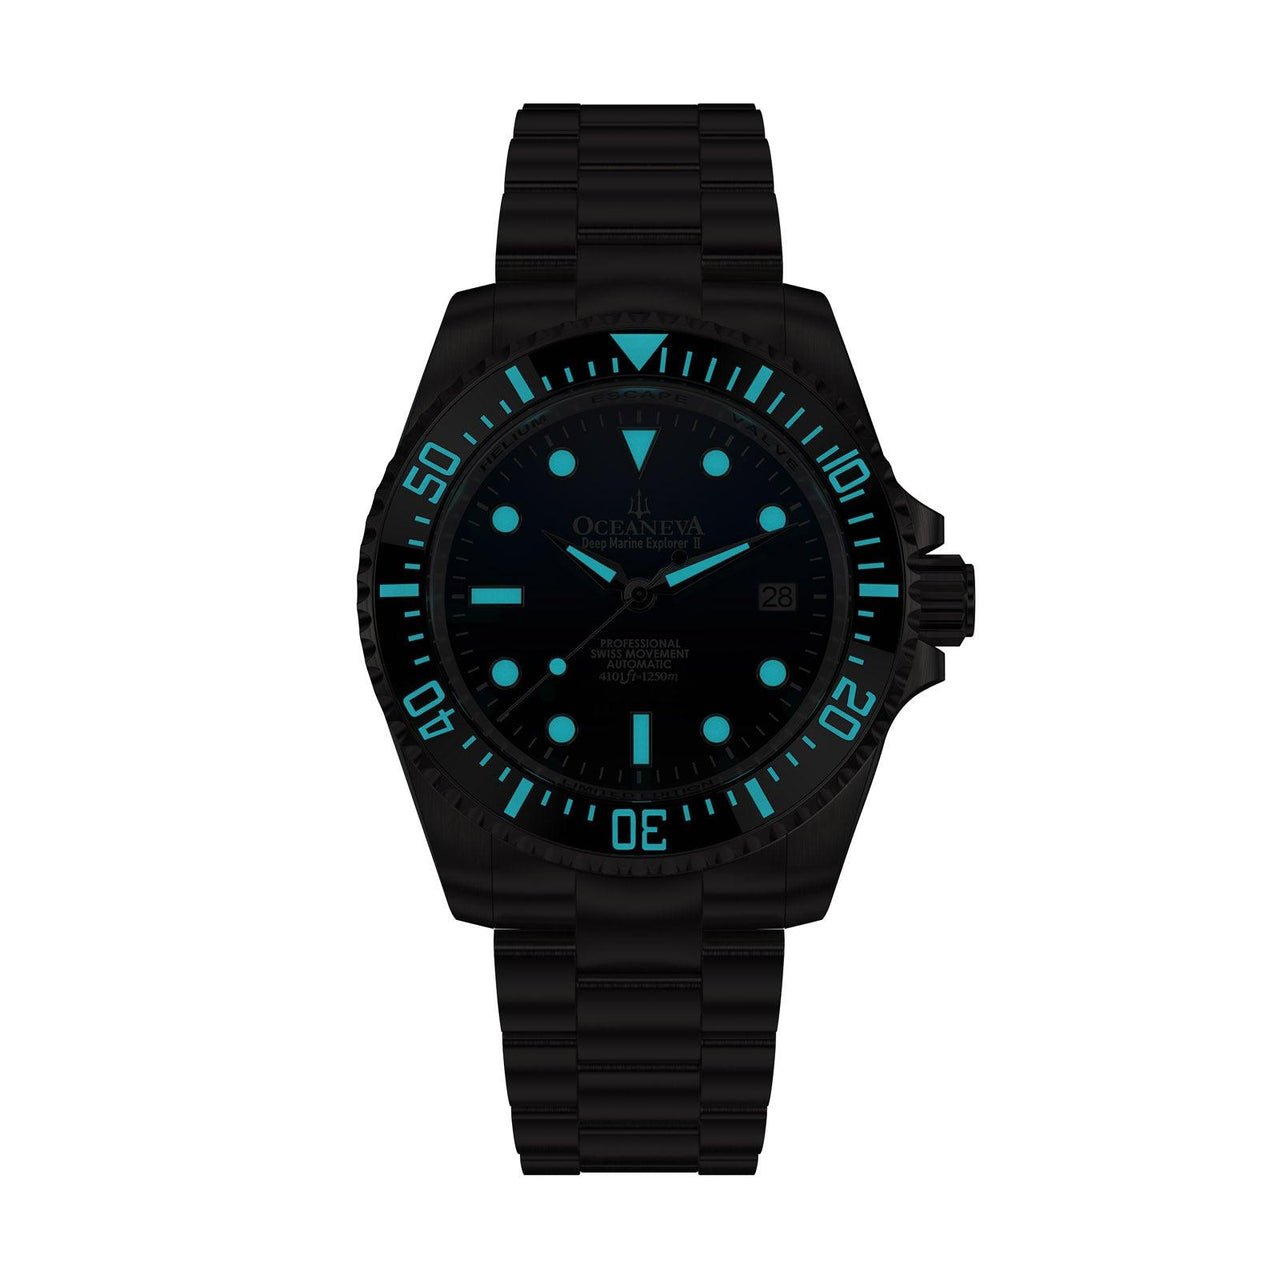 Oceaneva Deep Marine Explorer II1250M Titanium Watch Blue Black - BKIIHBLBTT Automatic watches, Blue and black dial, mens titanium watch, Titanium Watch, titanium watches for men